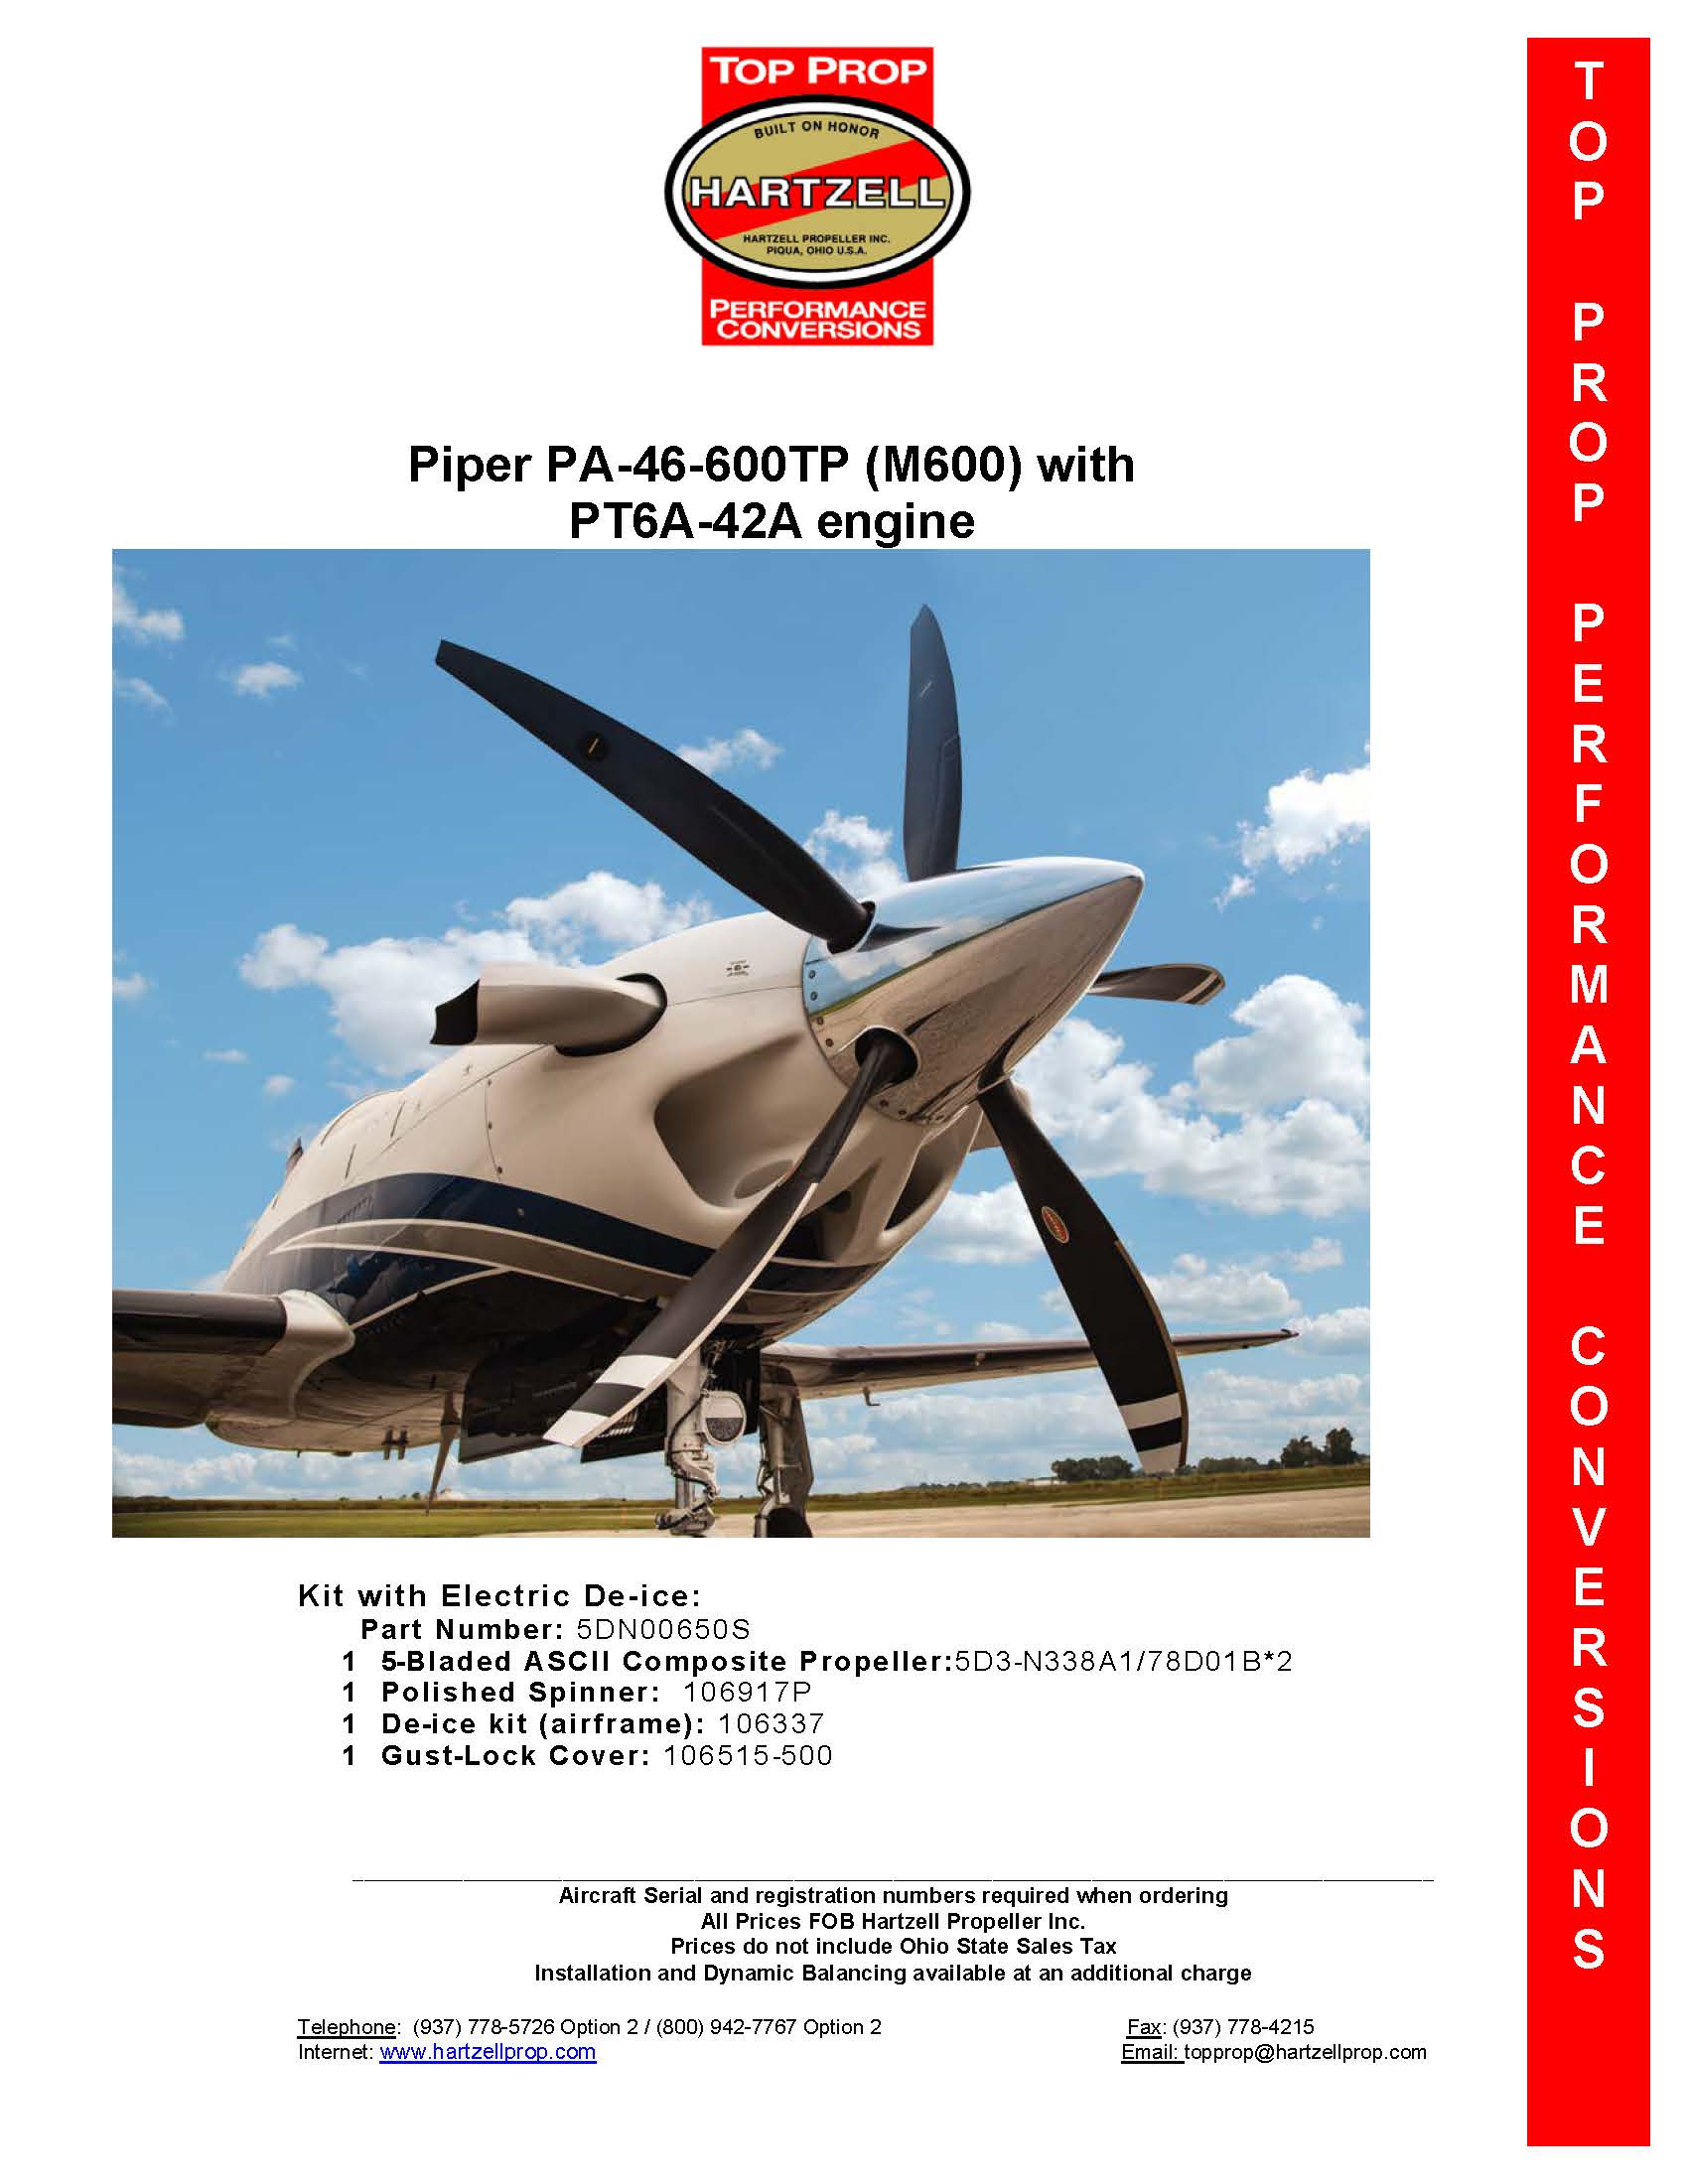 Piper-PA46-600TP-M600-5DN00650S-PAGE-1